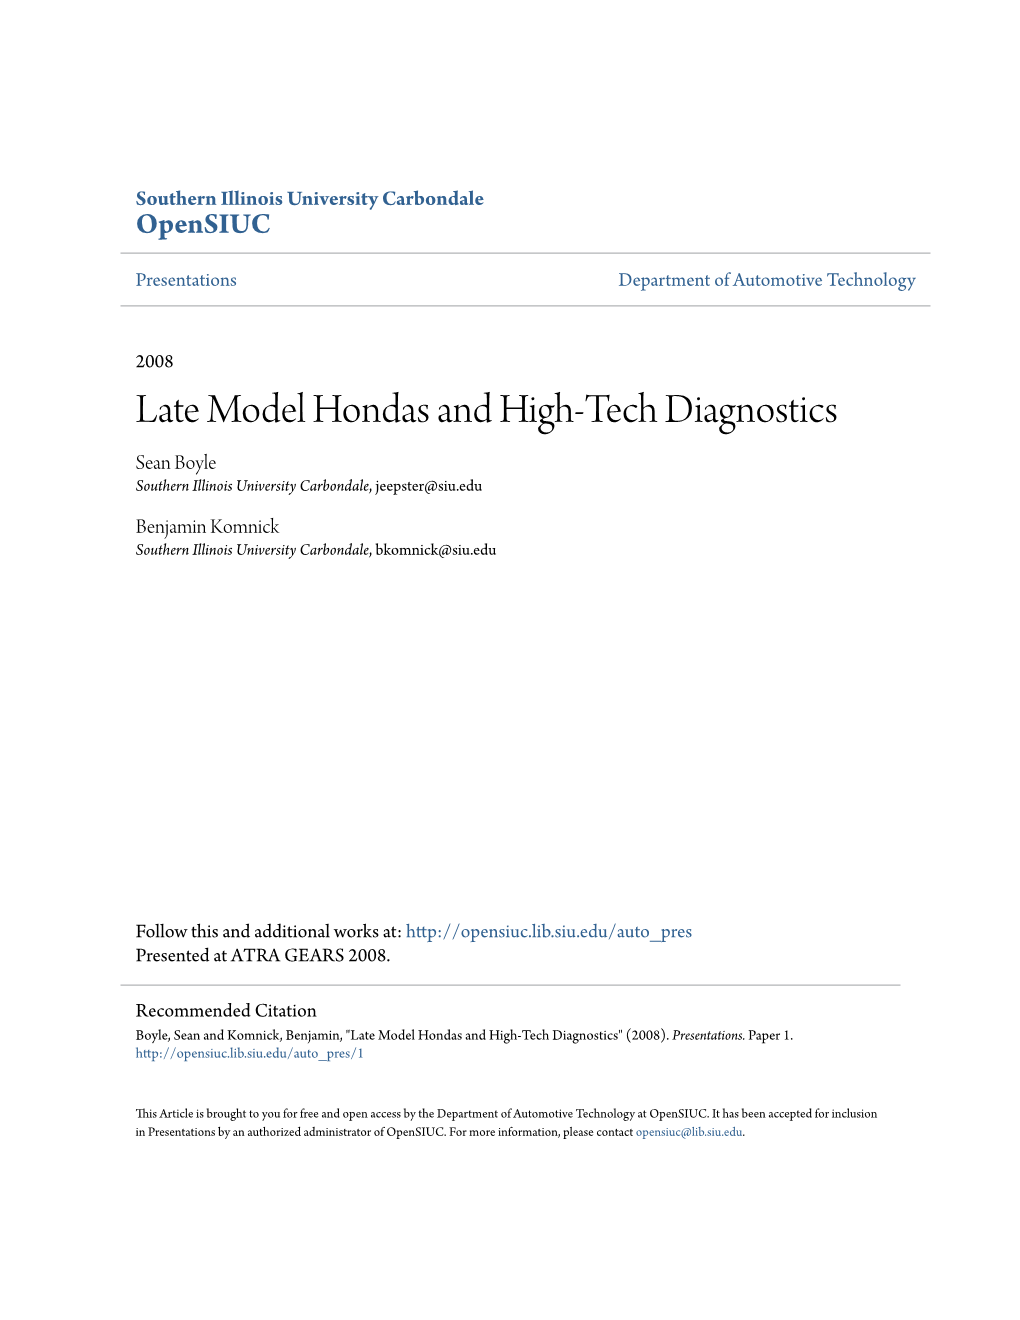 Late Model Hondas and High-Tech Diagnostics Sean Boyle Southern Illinois University Carbondale, Jeepster@Siu.Edu